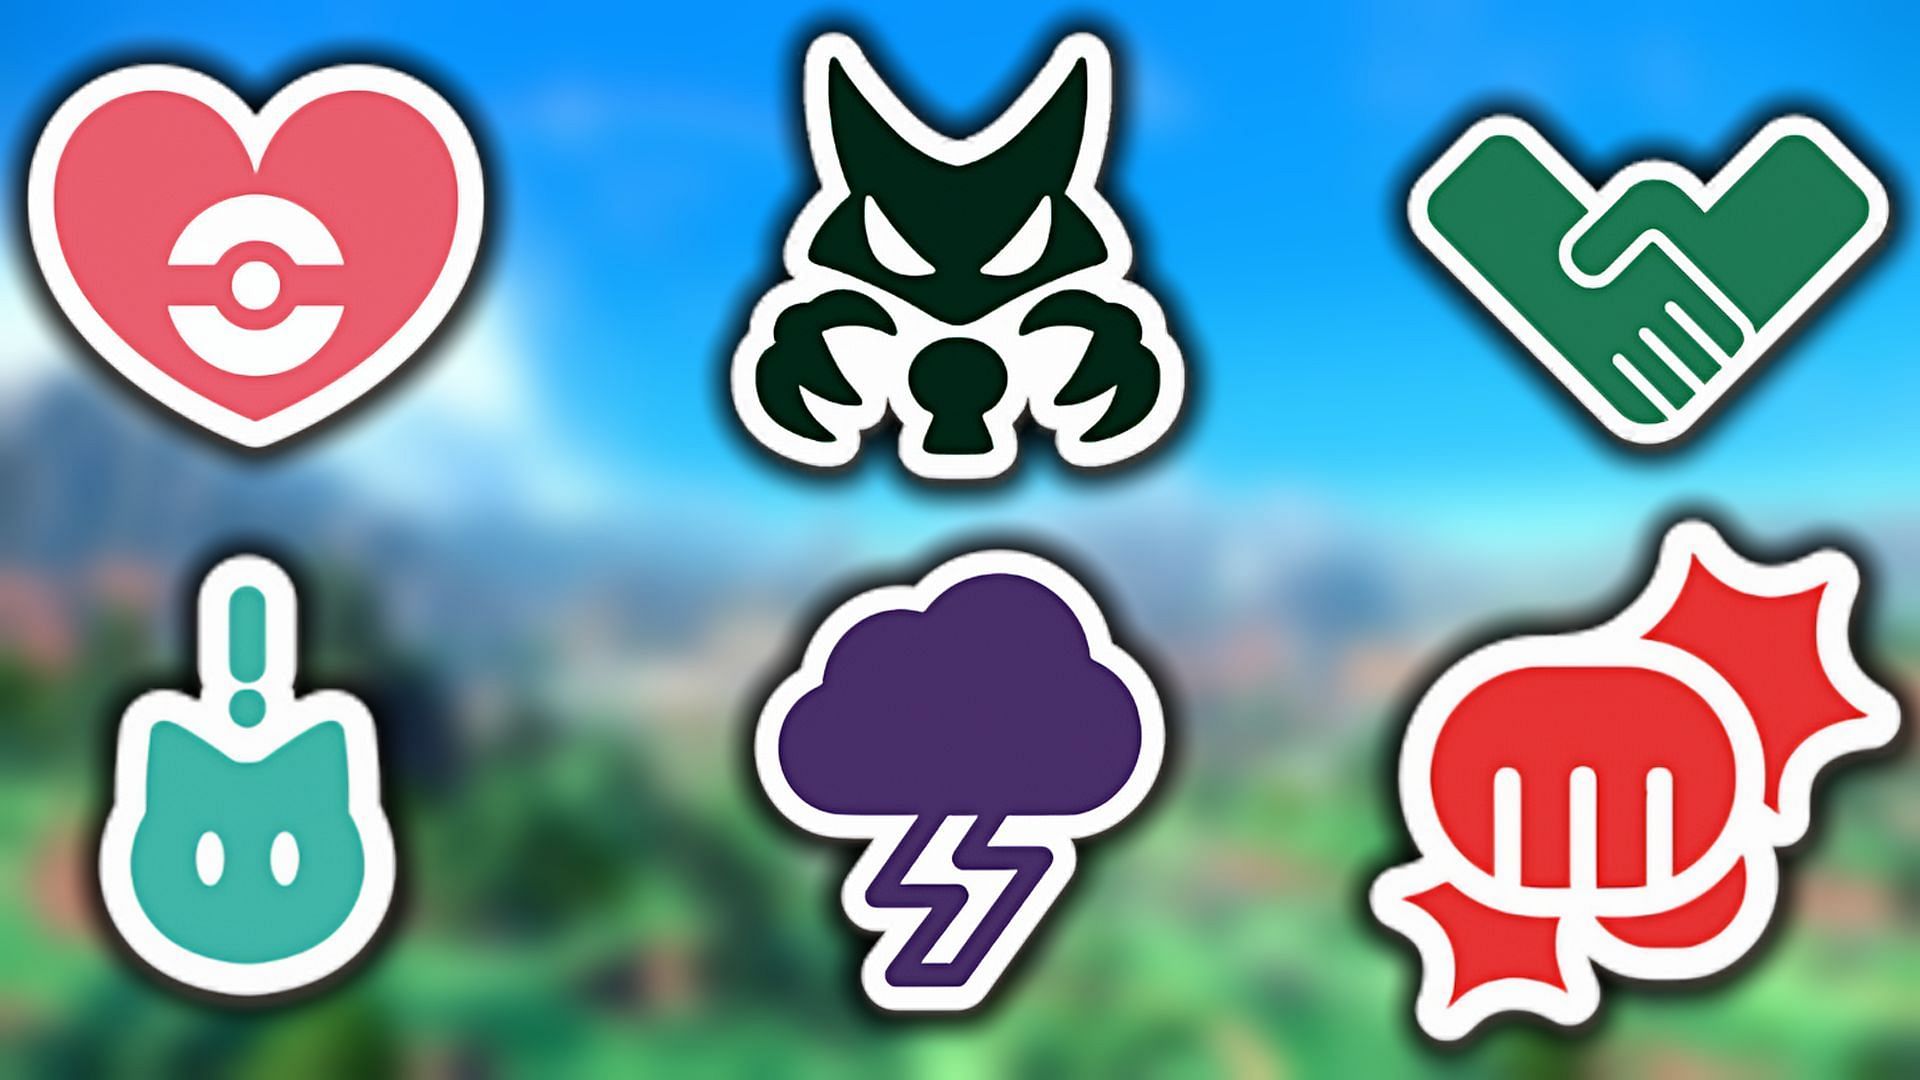 Pokémon Scarlet and Violet Tera Raid symbols explained - Dot Esports